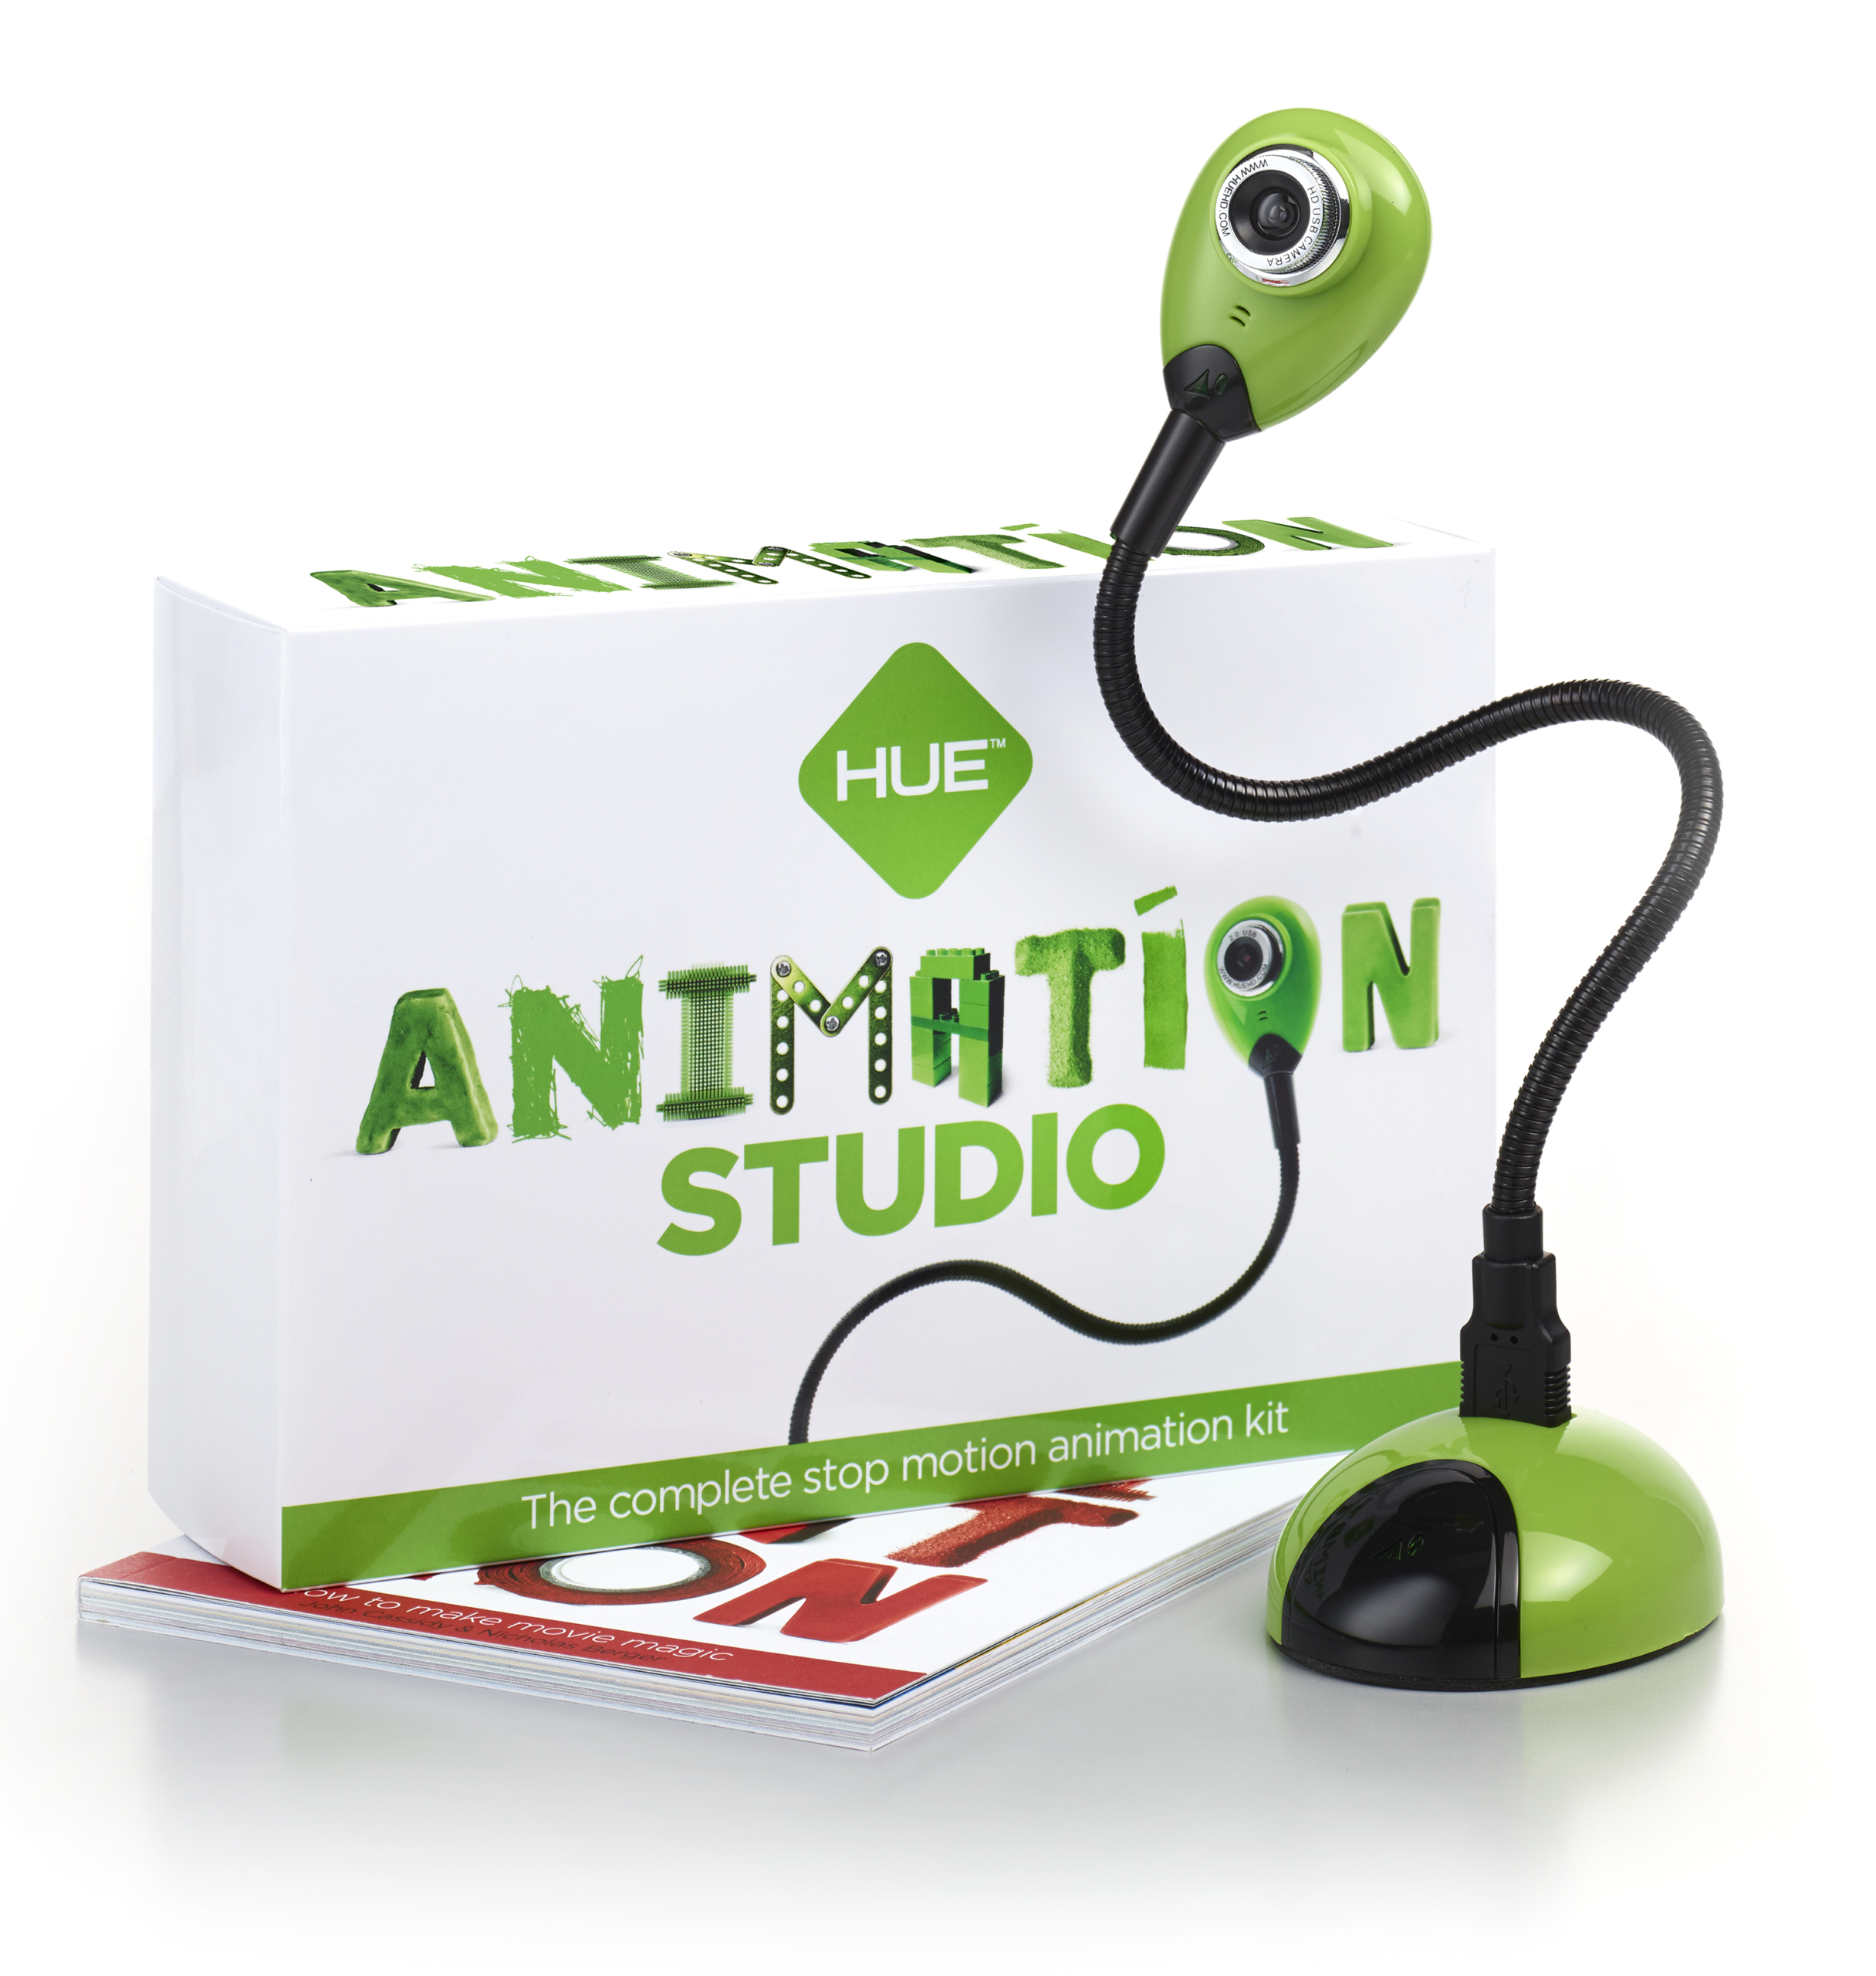 HUE Animation Studio (green)